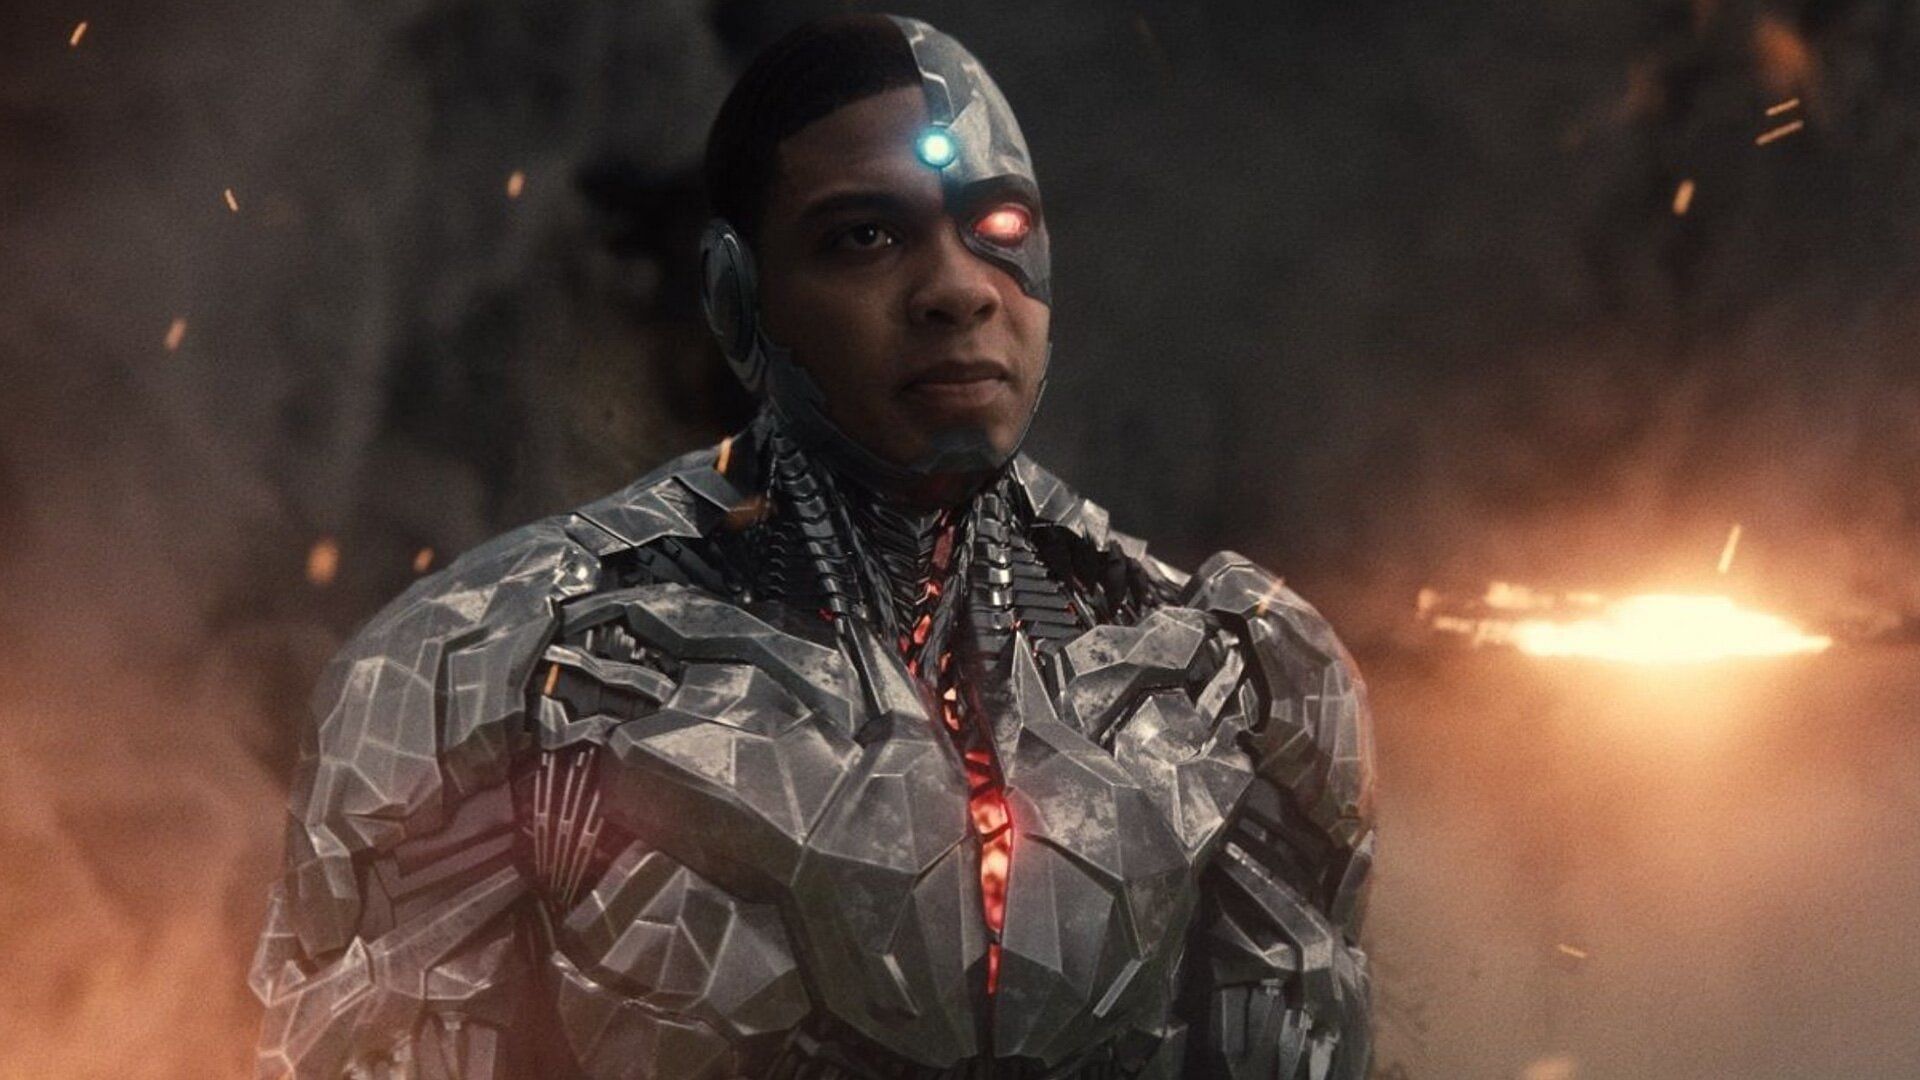 Cyborg: A Technological Marvel (Image via DC Studios)